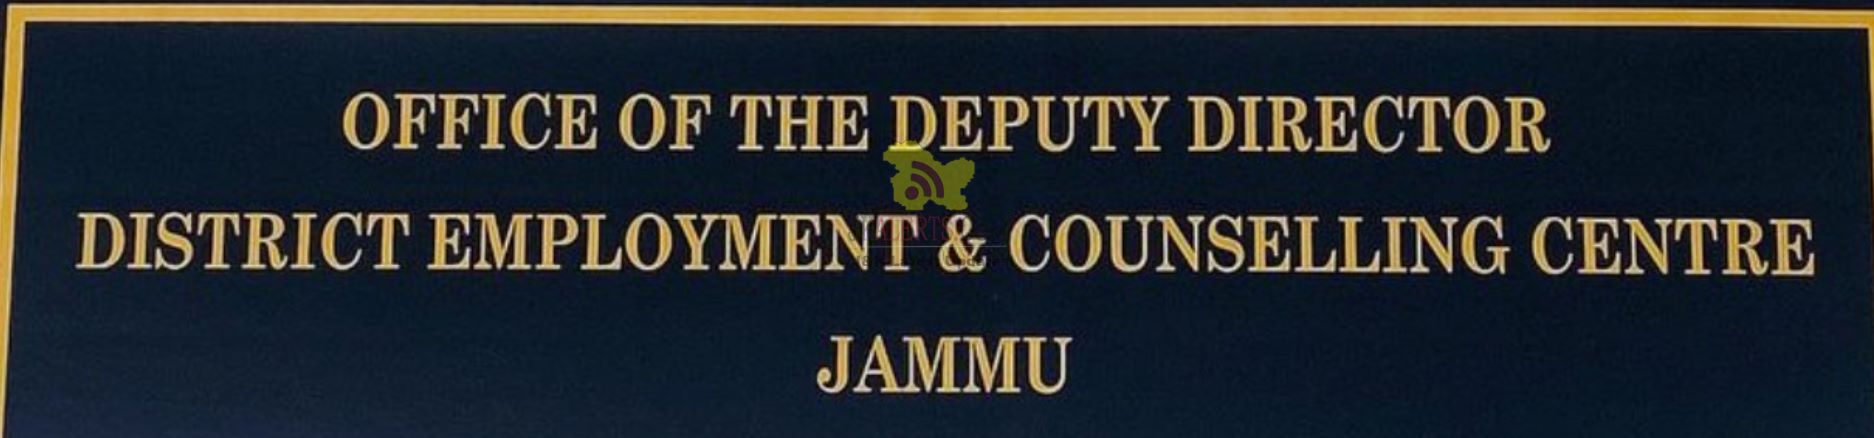 District Employment and Counselling Centre Jammu Mumkin Scheme.